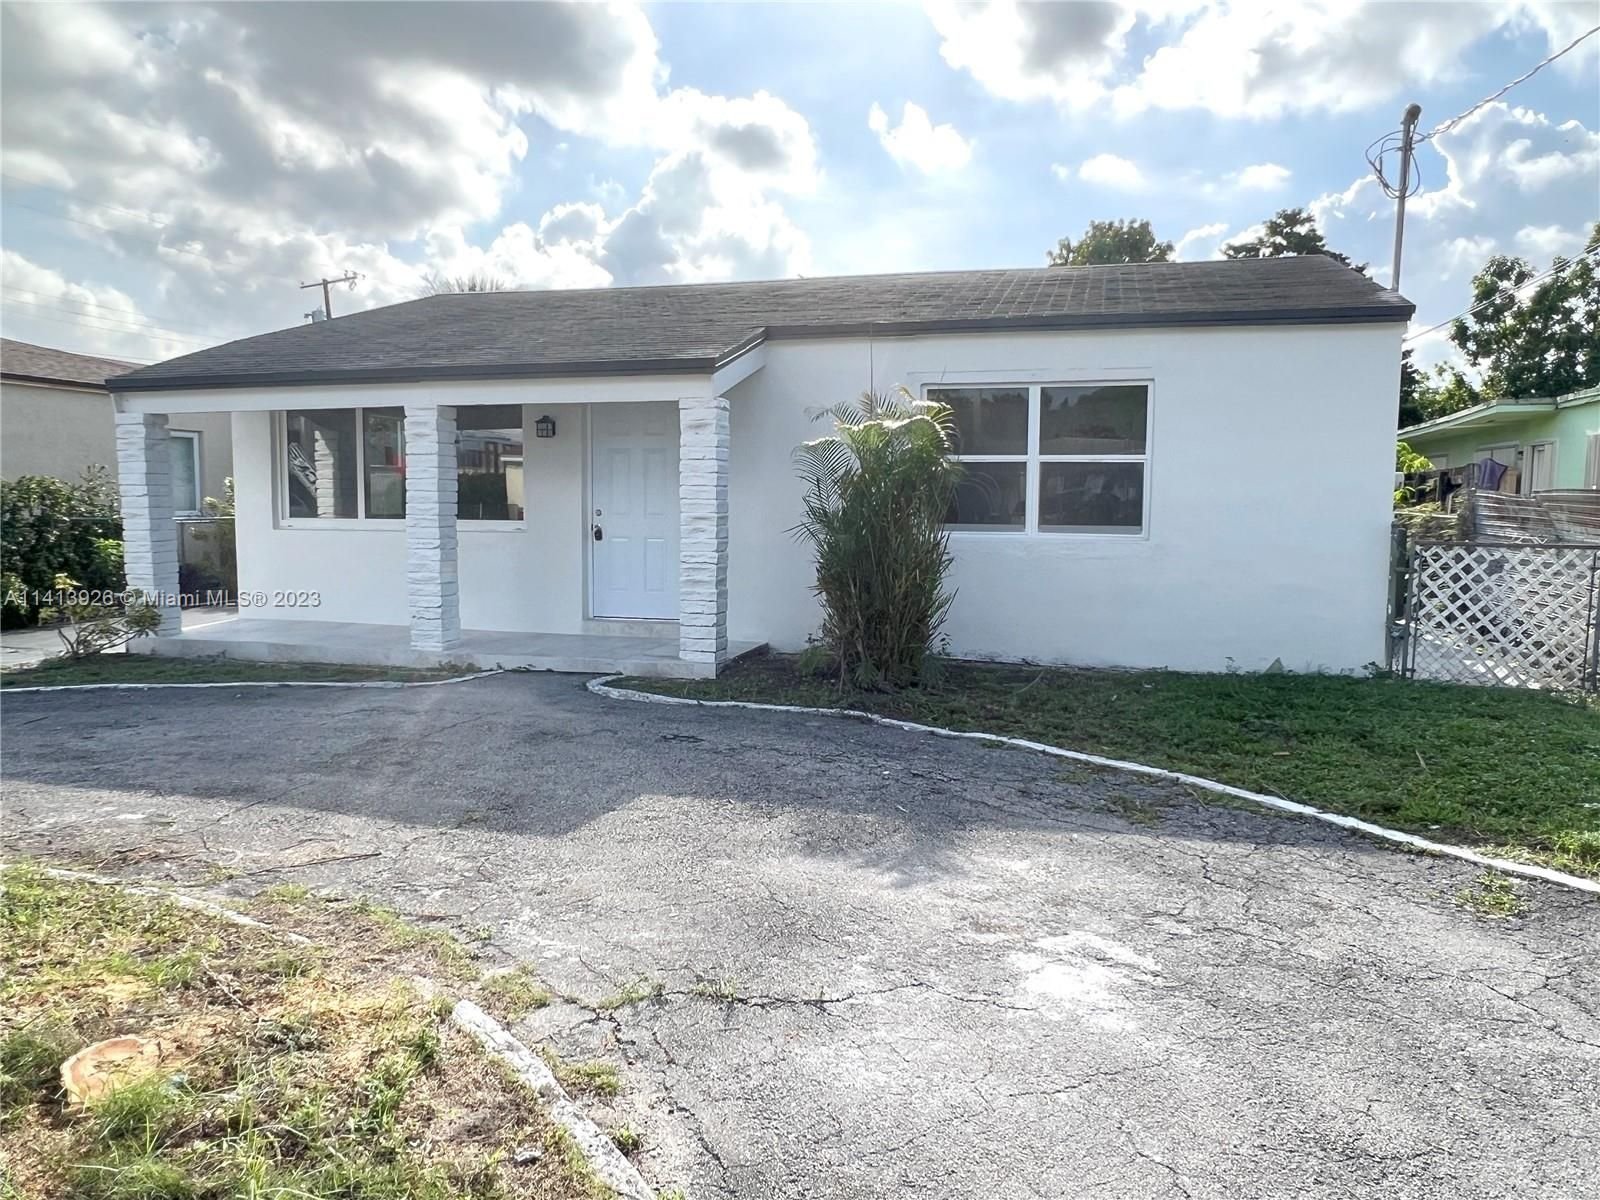 Real estate property located at 31 67th Ct, Miami-Dade County, Miami, FL